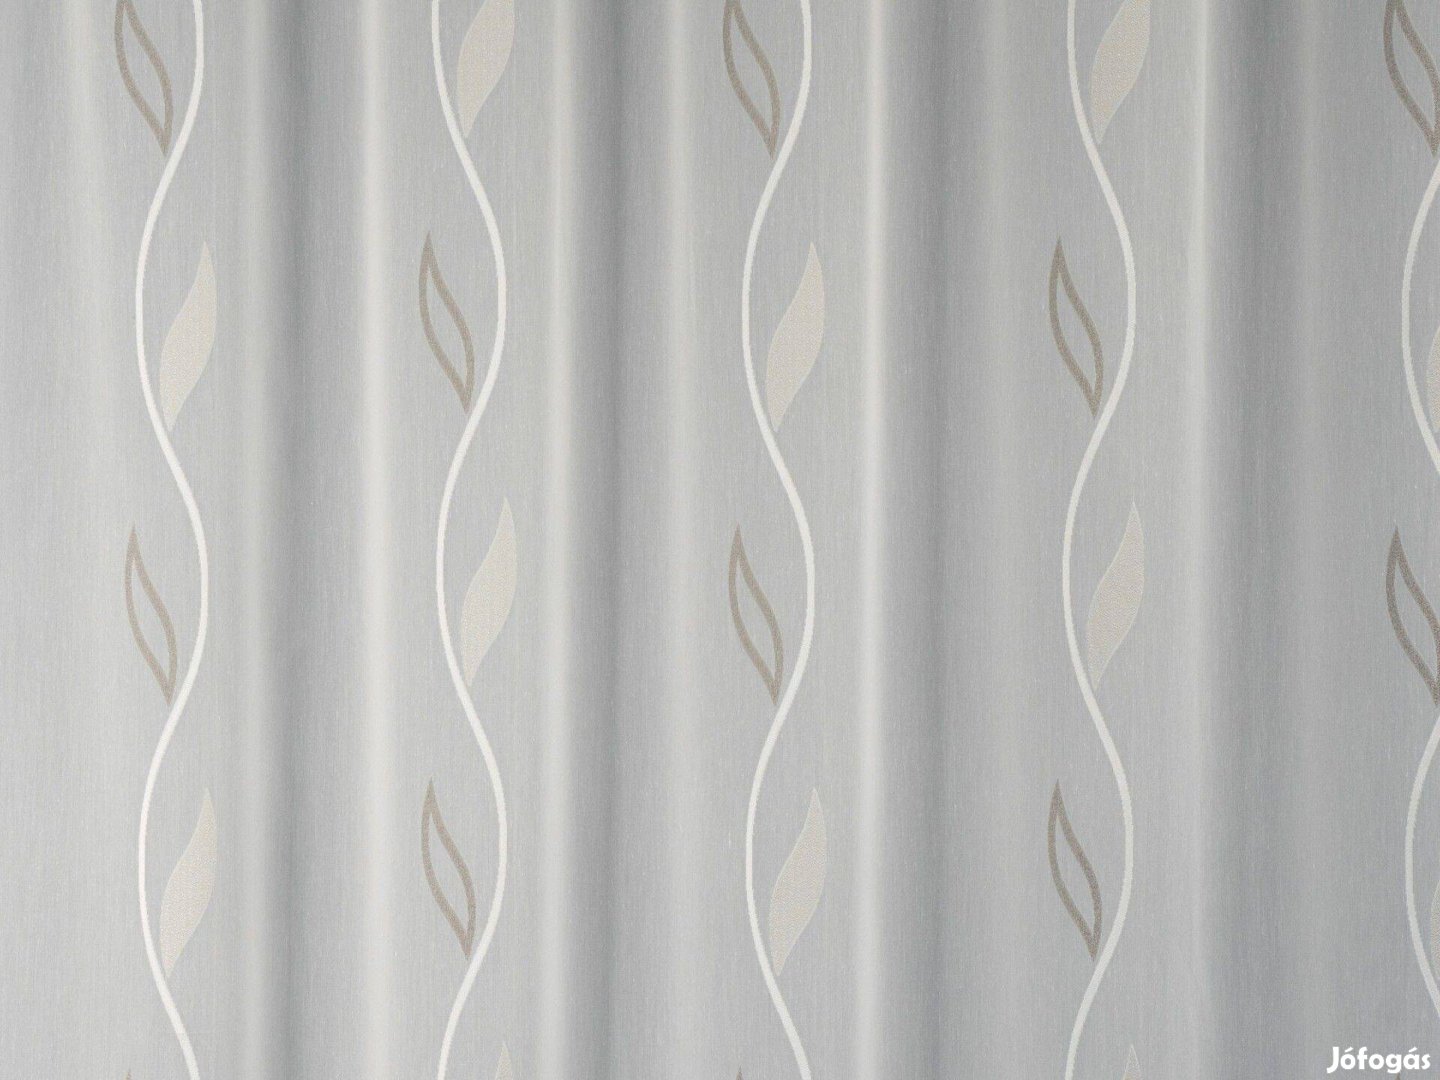 Hófehér-barna új hullám mintás függöny (8m x 180 cm)